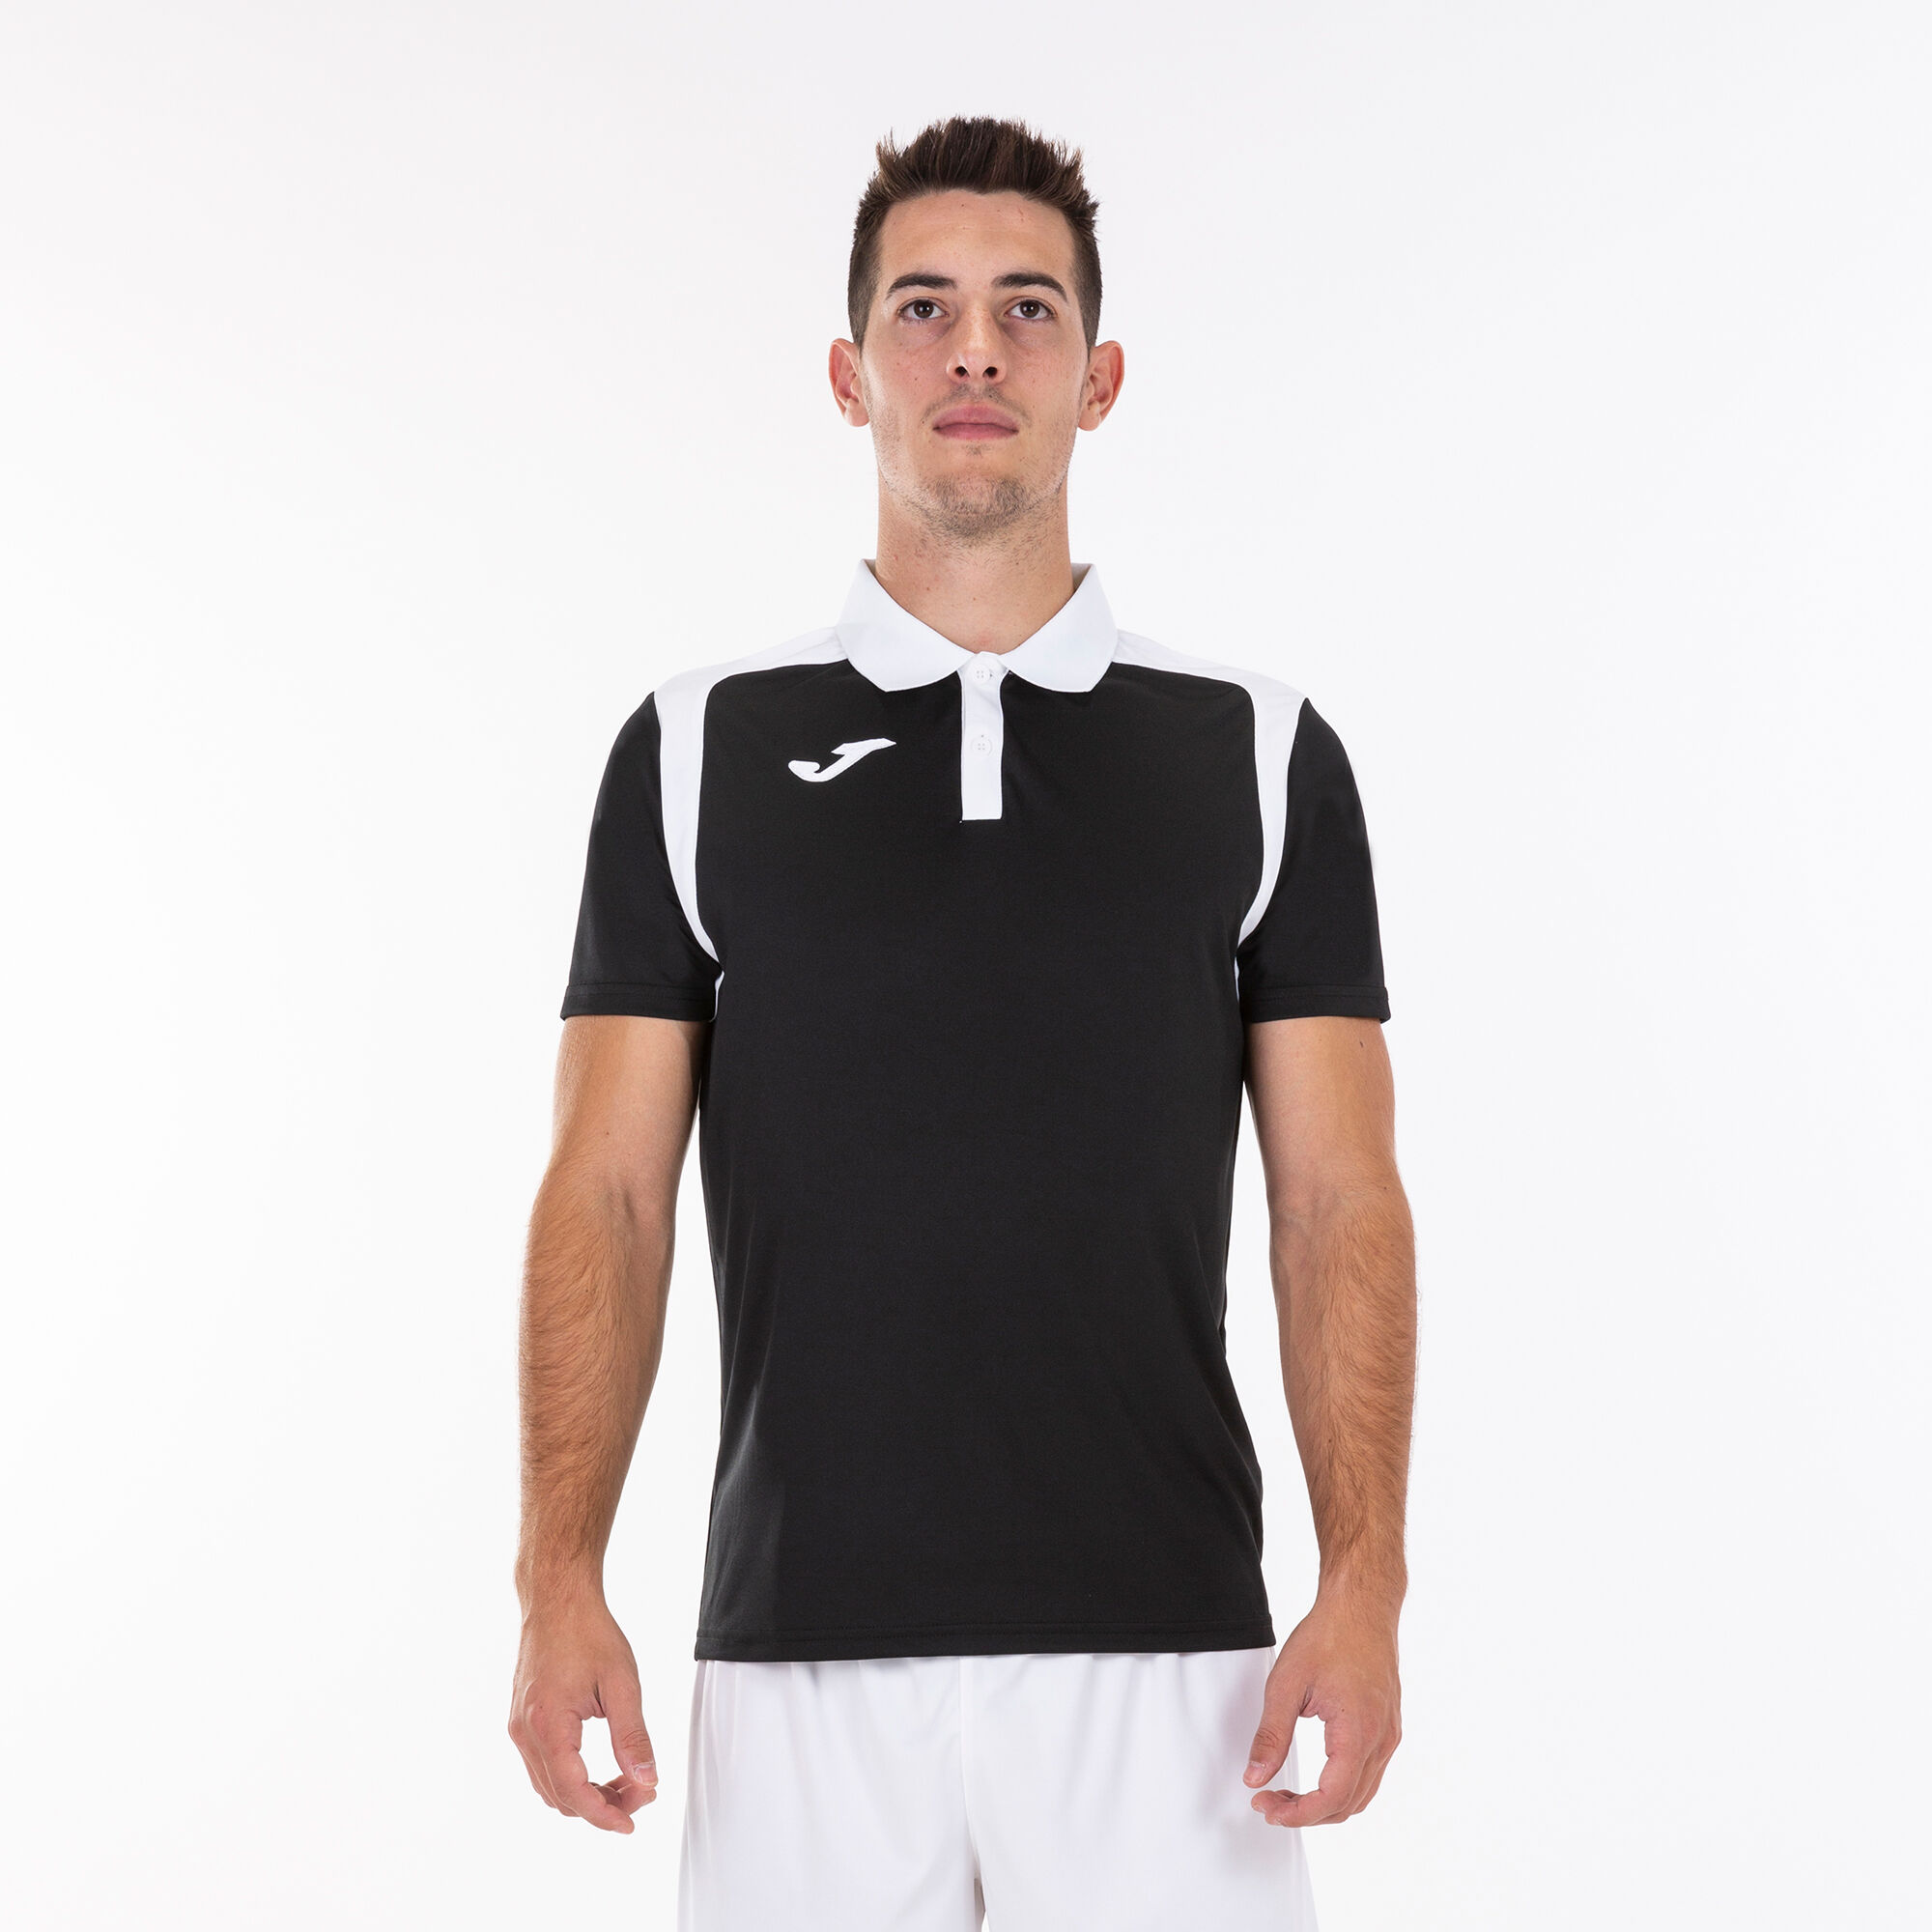 Polo shirt short-sleeve man Championship V black white